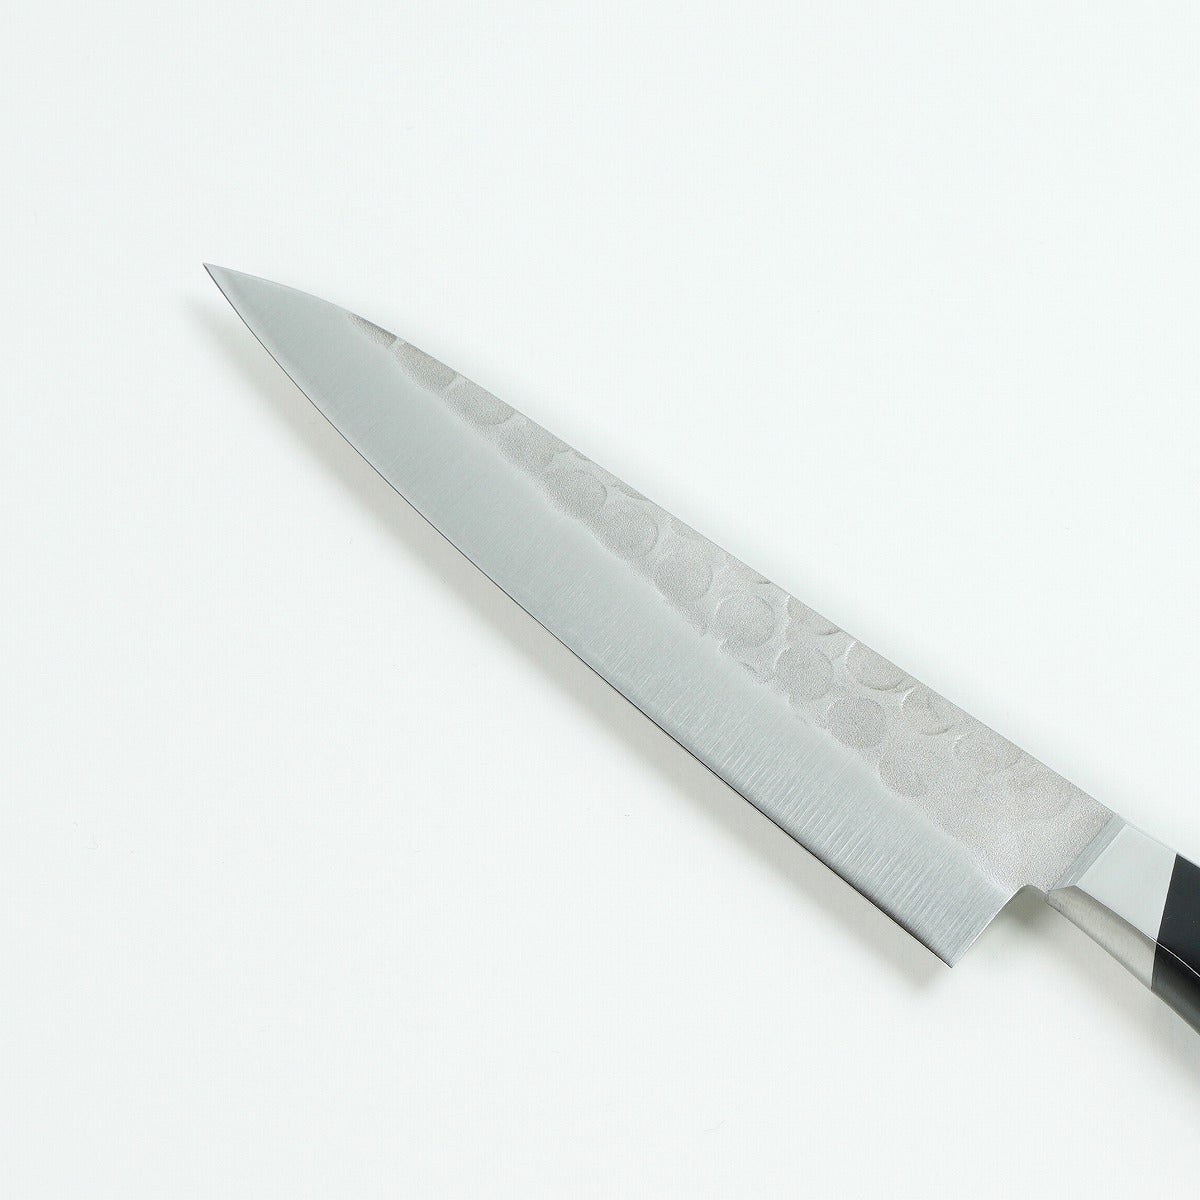 HONMAMON 生果刀 (功能刀) 青紙鋼2號 + 梨地模樣, 130mm